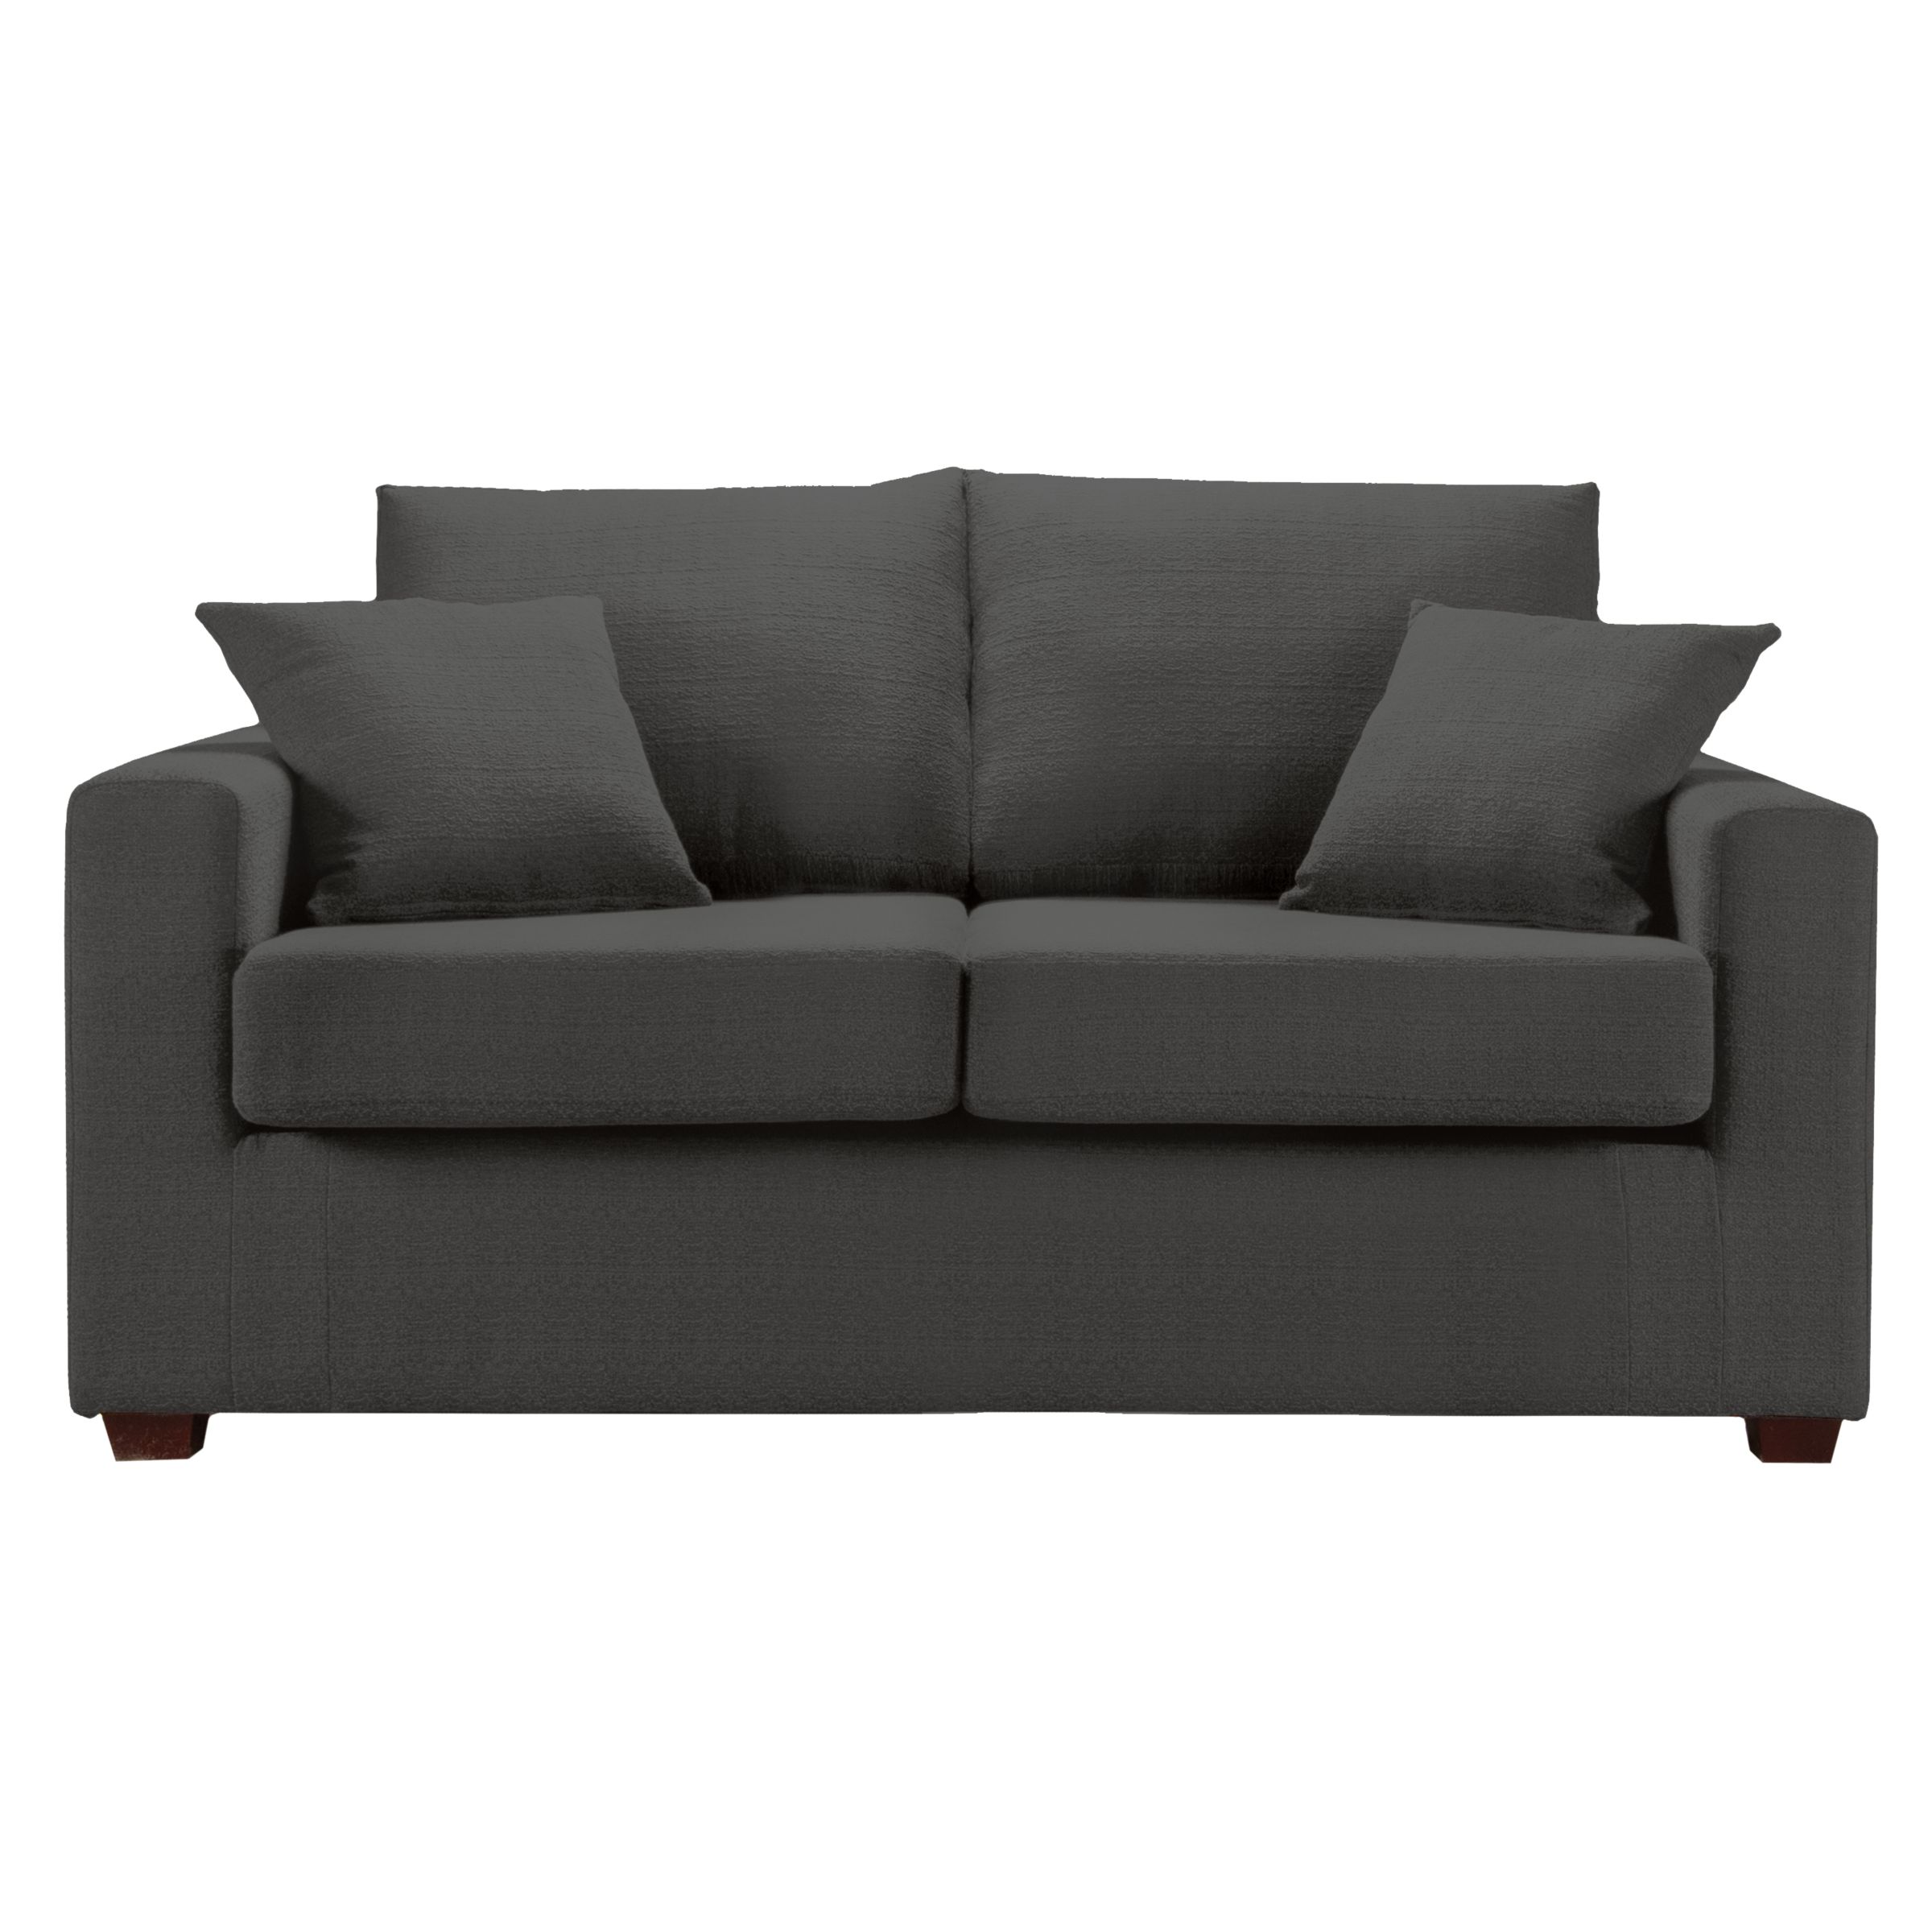 Ravel Medium Sofa Bed, Charcoal